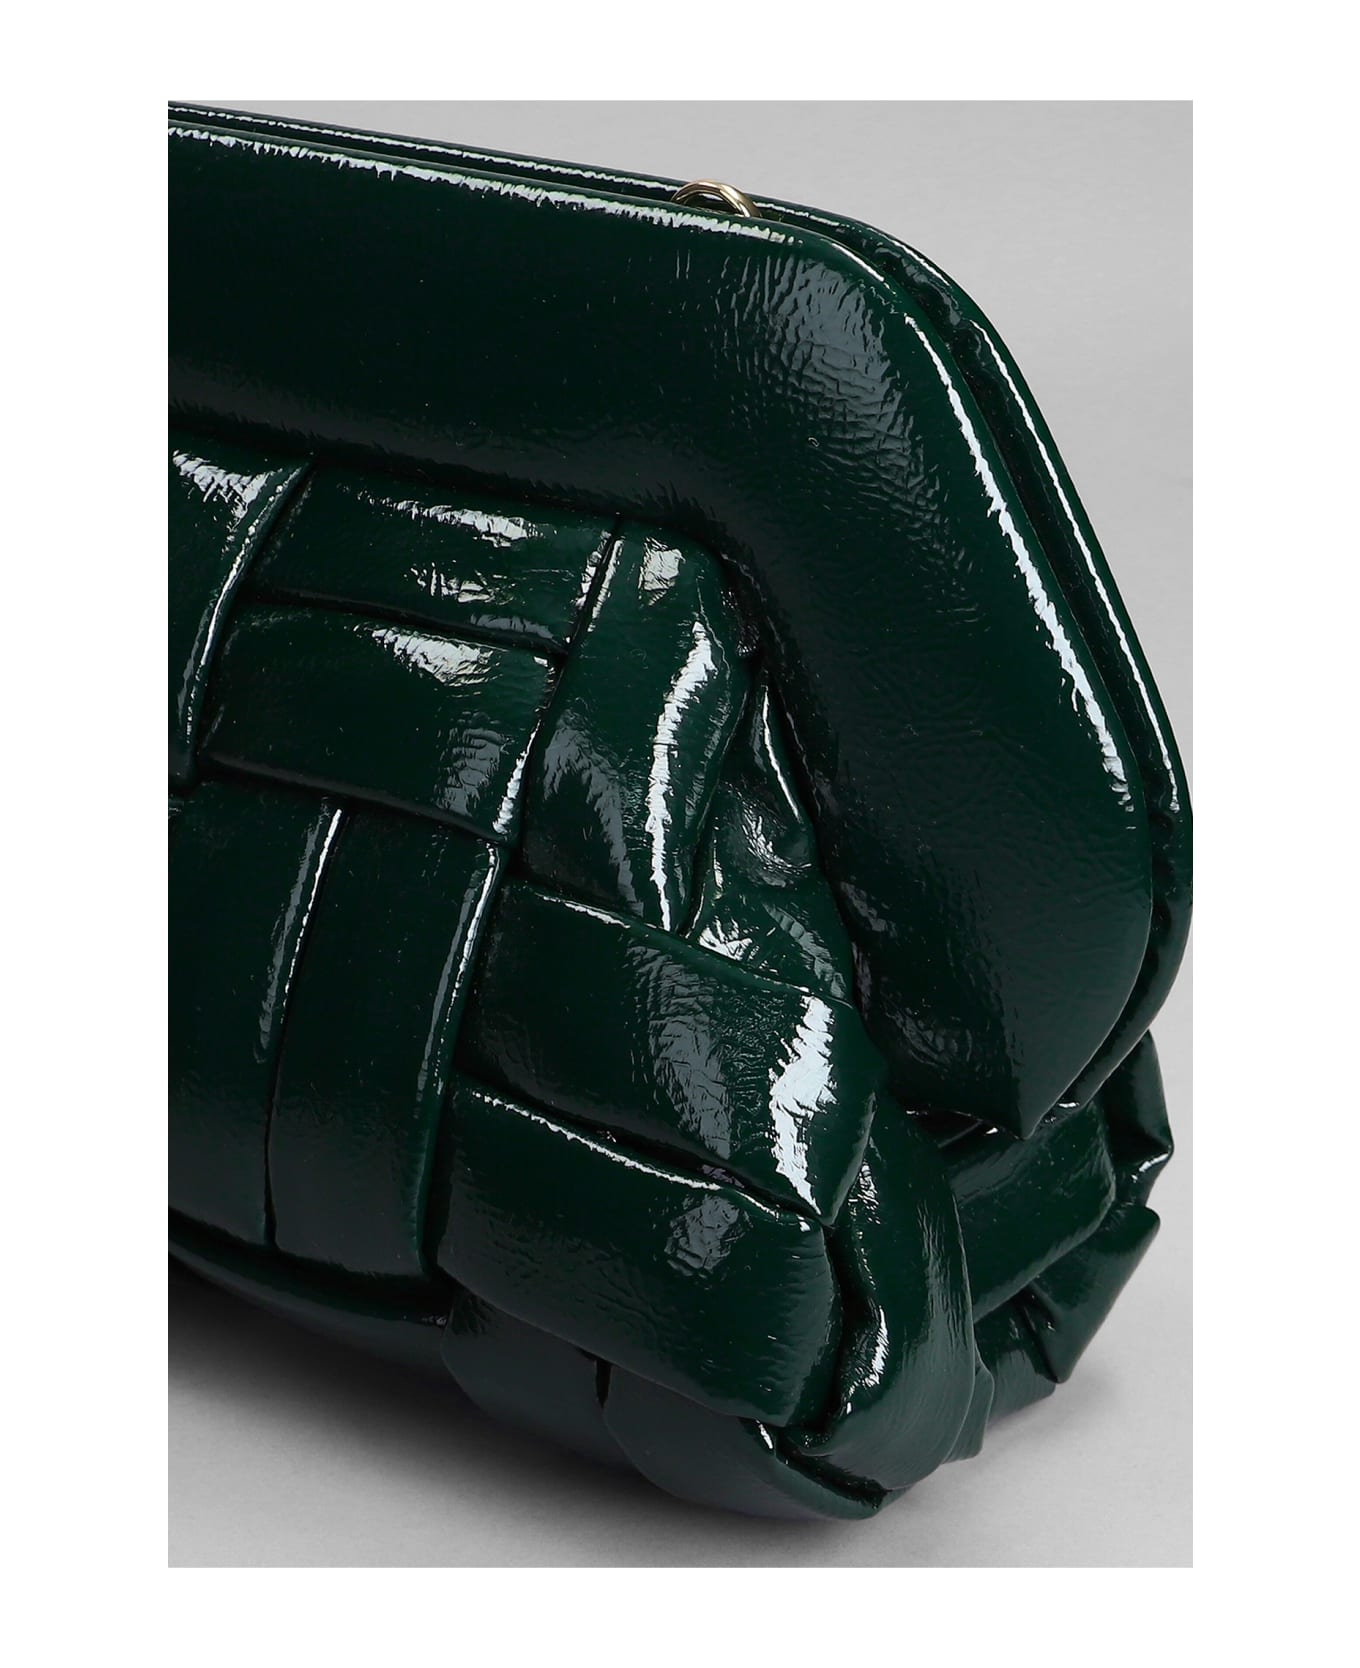 THEMOIRè Bios Weaved Clutch In Green Patent Leather - green